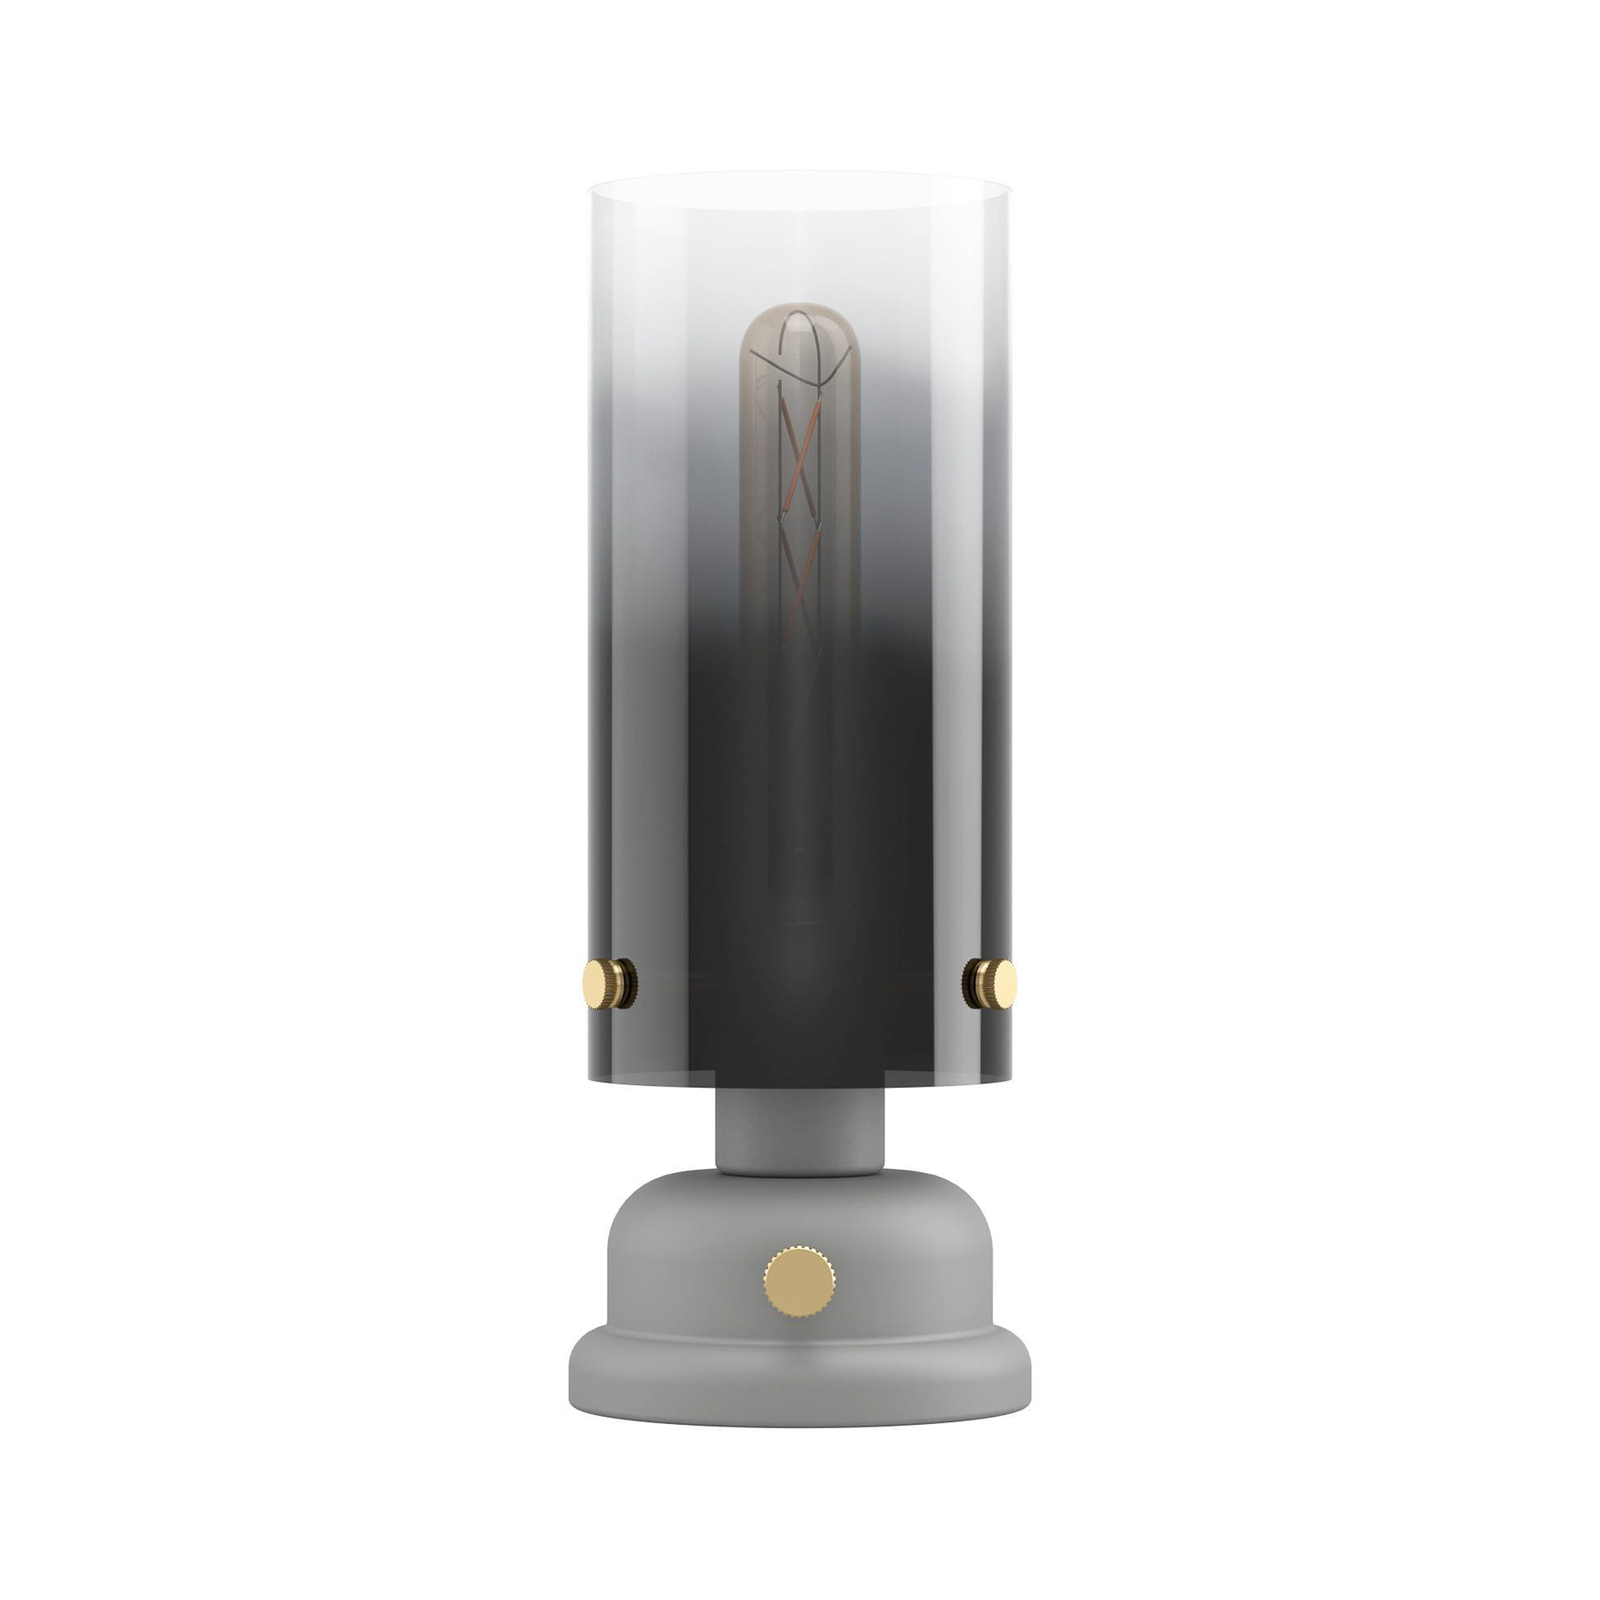 Lampe à poser Gargrave au design de lampe à huile